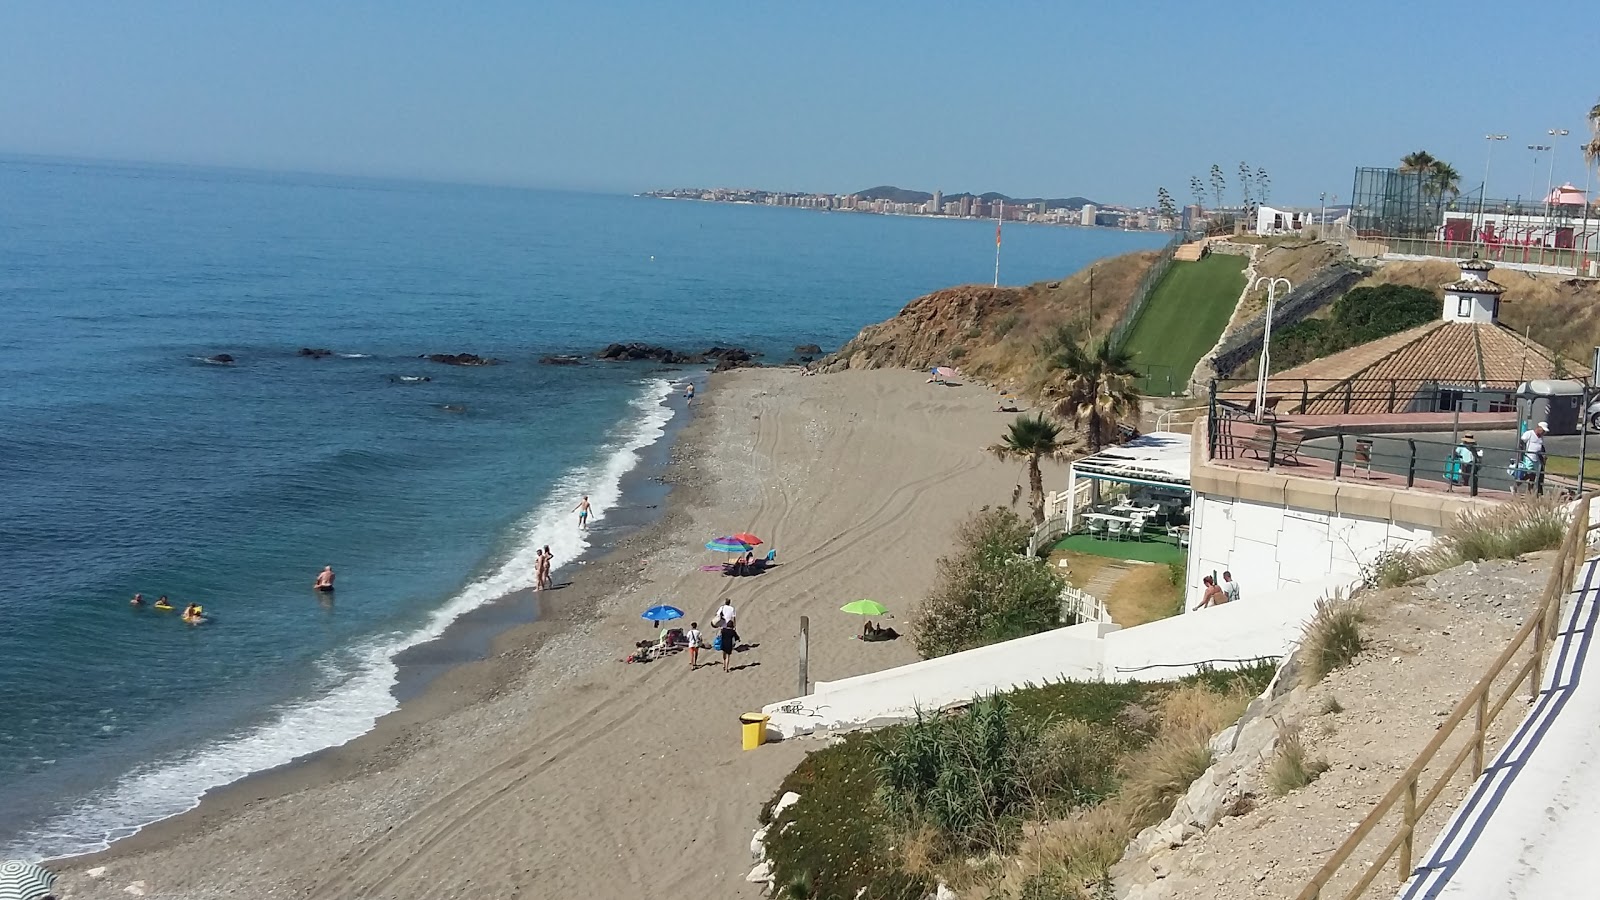 Foto di Playa la Perla con una superficie del sabbia grigia